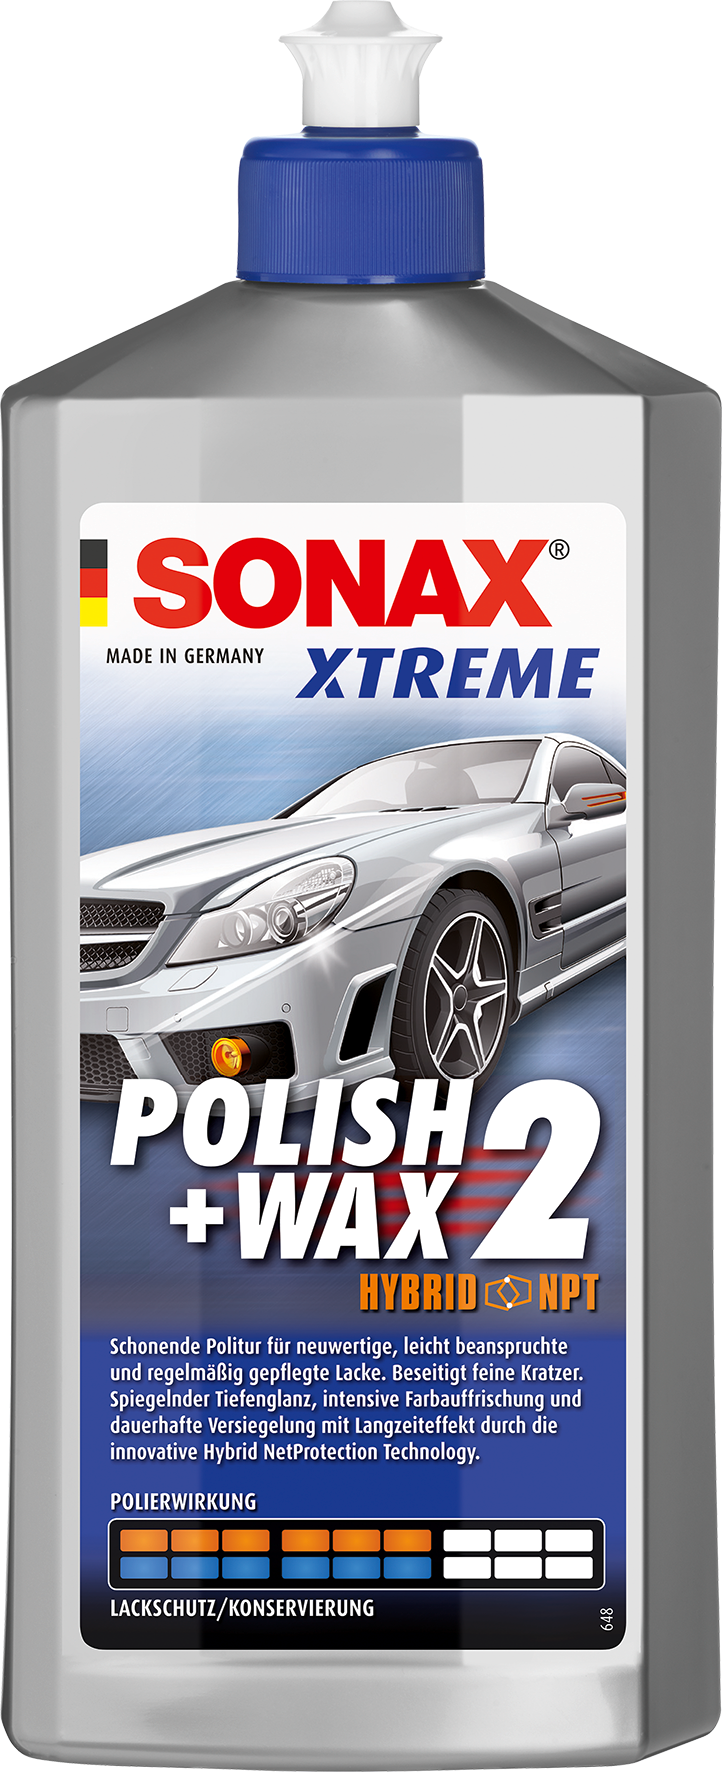 polish SONAX Xtreme Polish + Wax 2 Hybrid NPT 500ml